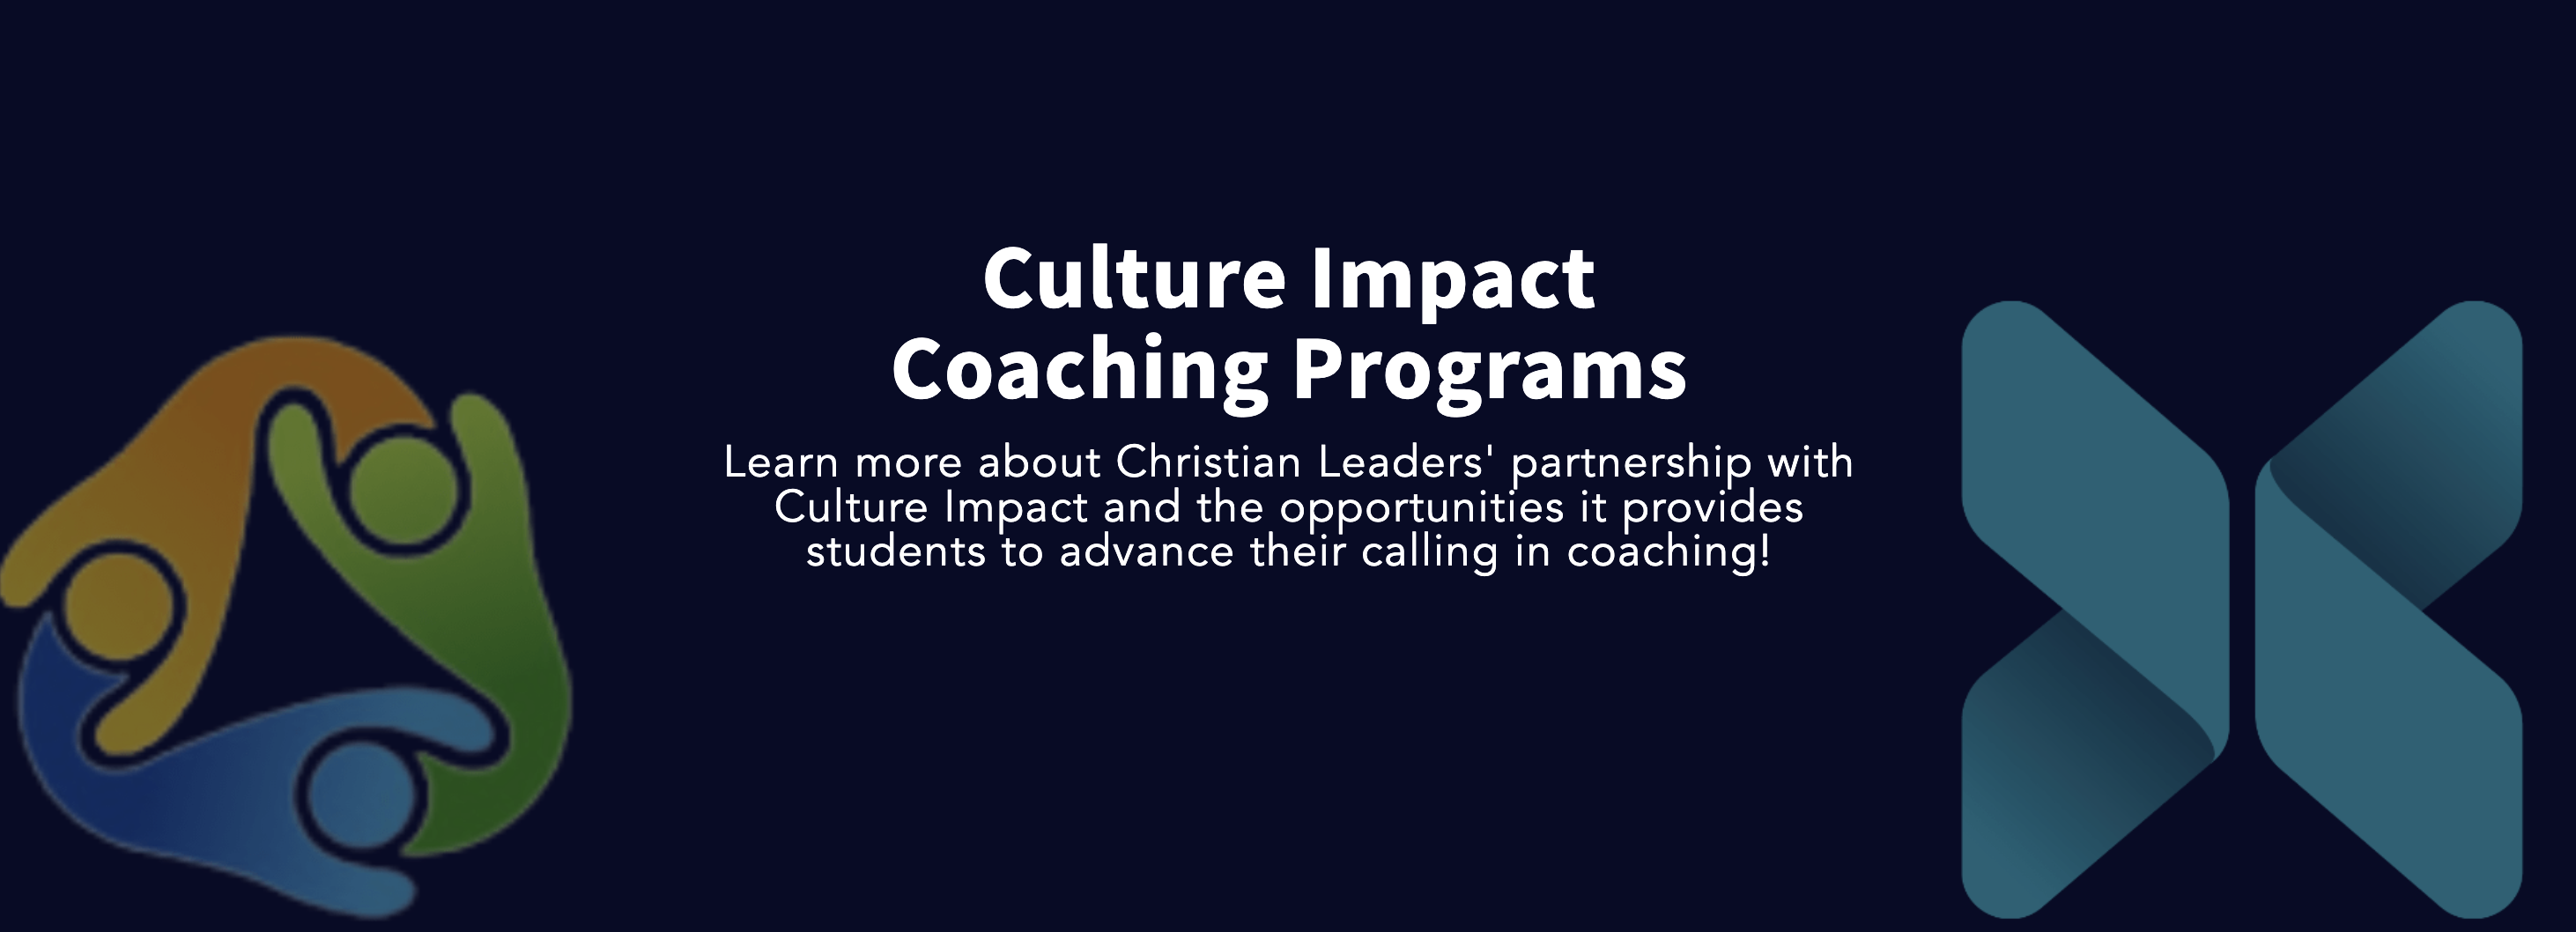 culture impact coaching programs